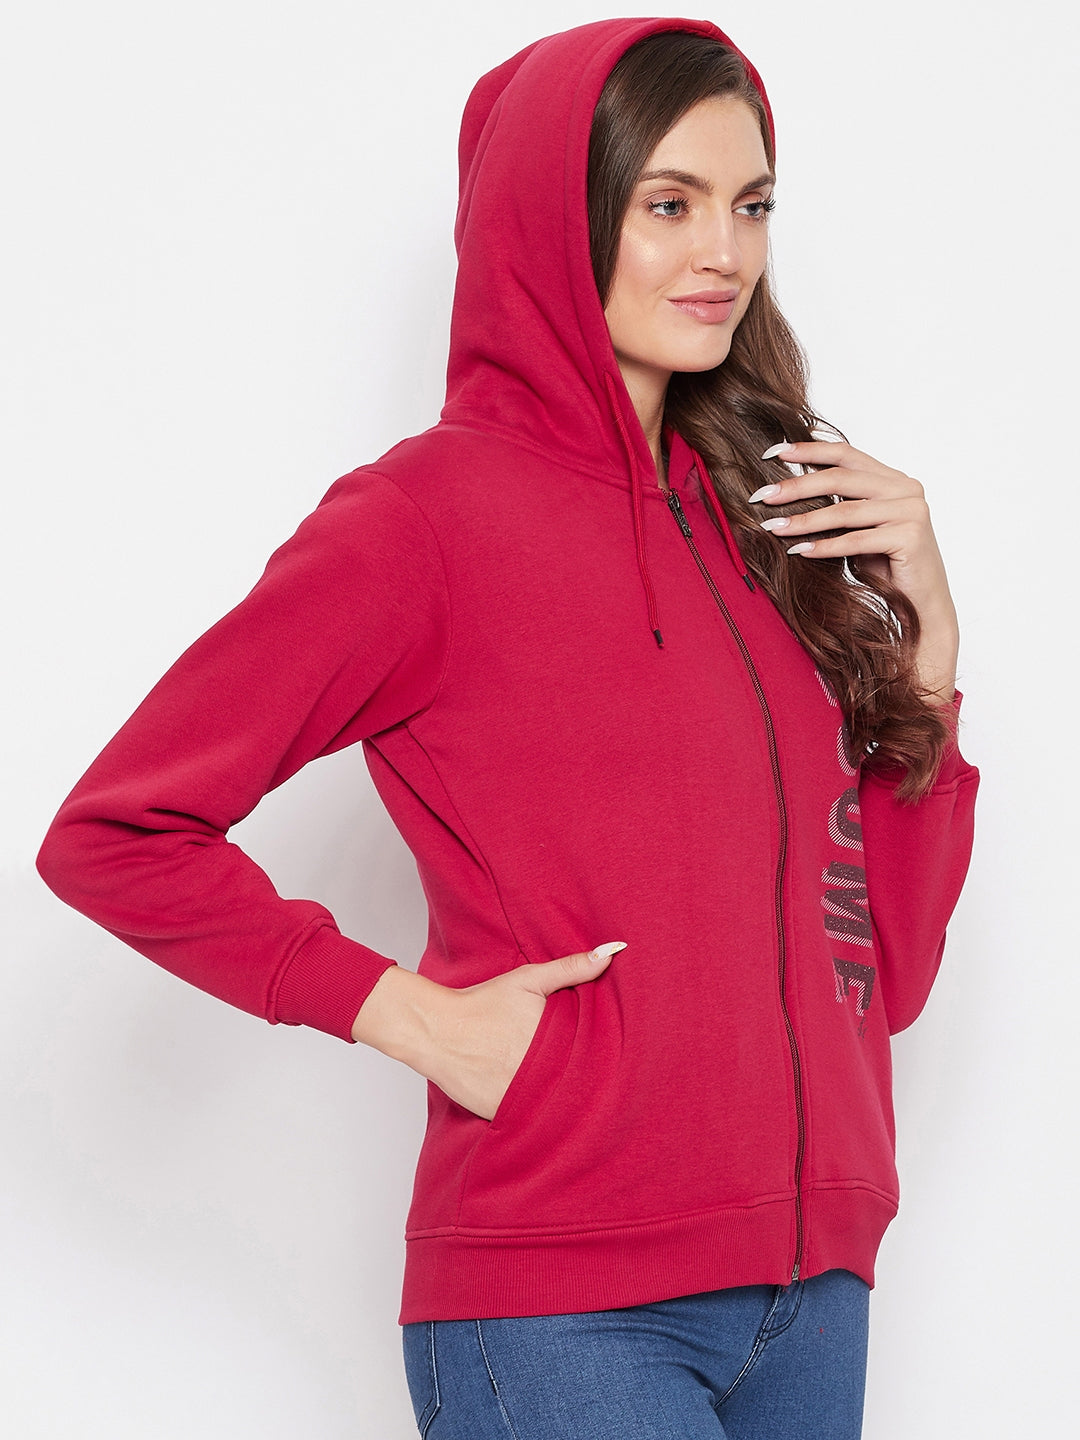 Livfree Women's Hoodie Full Sleeves Solid Sweatshirt - tango Red (Zipper)